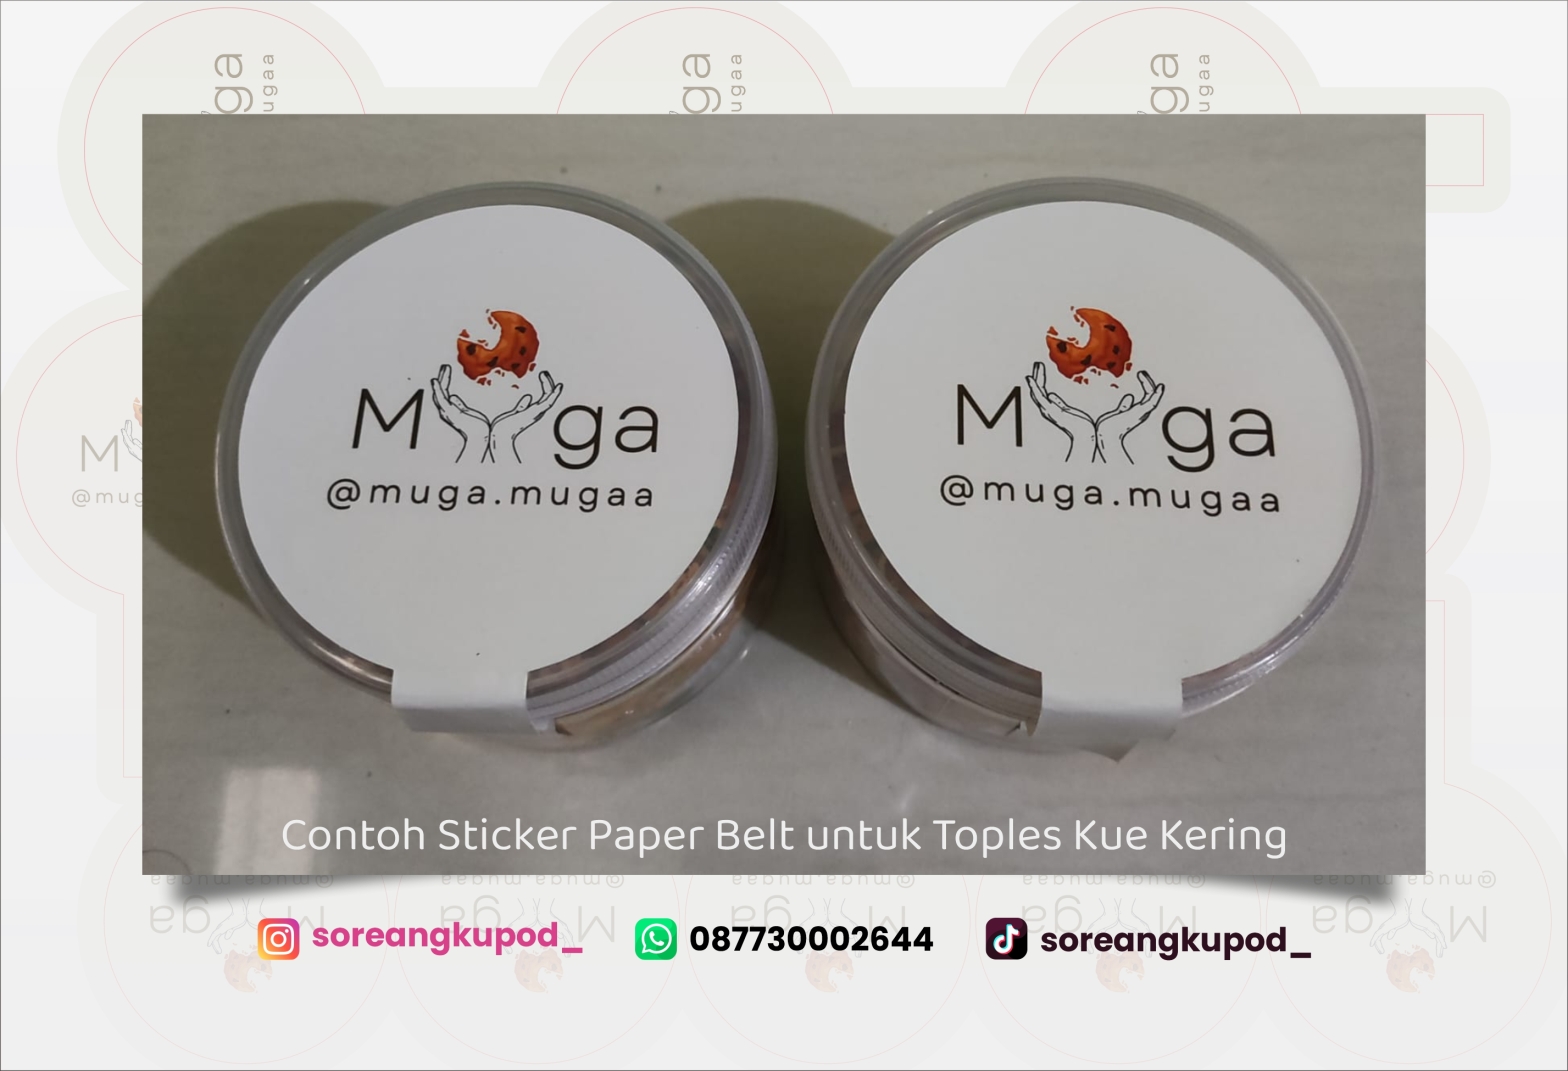 Contoh Sticker Paper Belt untuk Toples Kue Kering